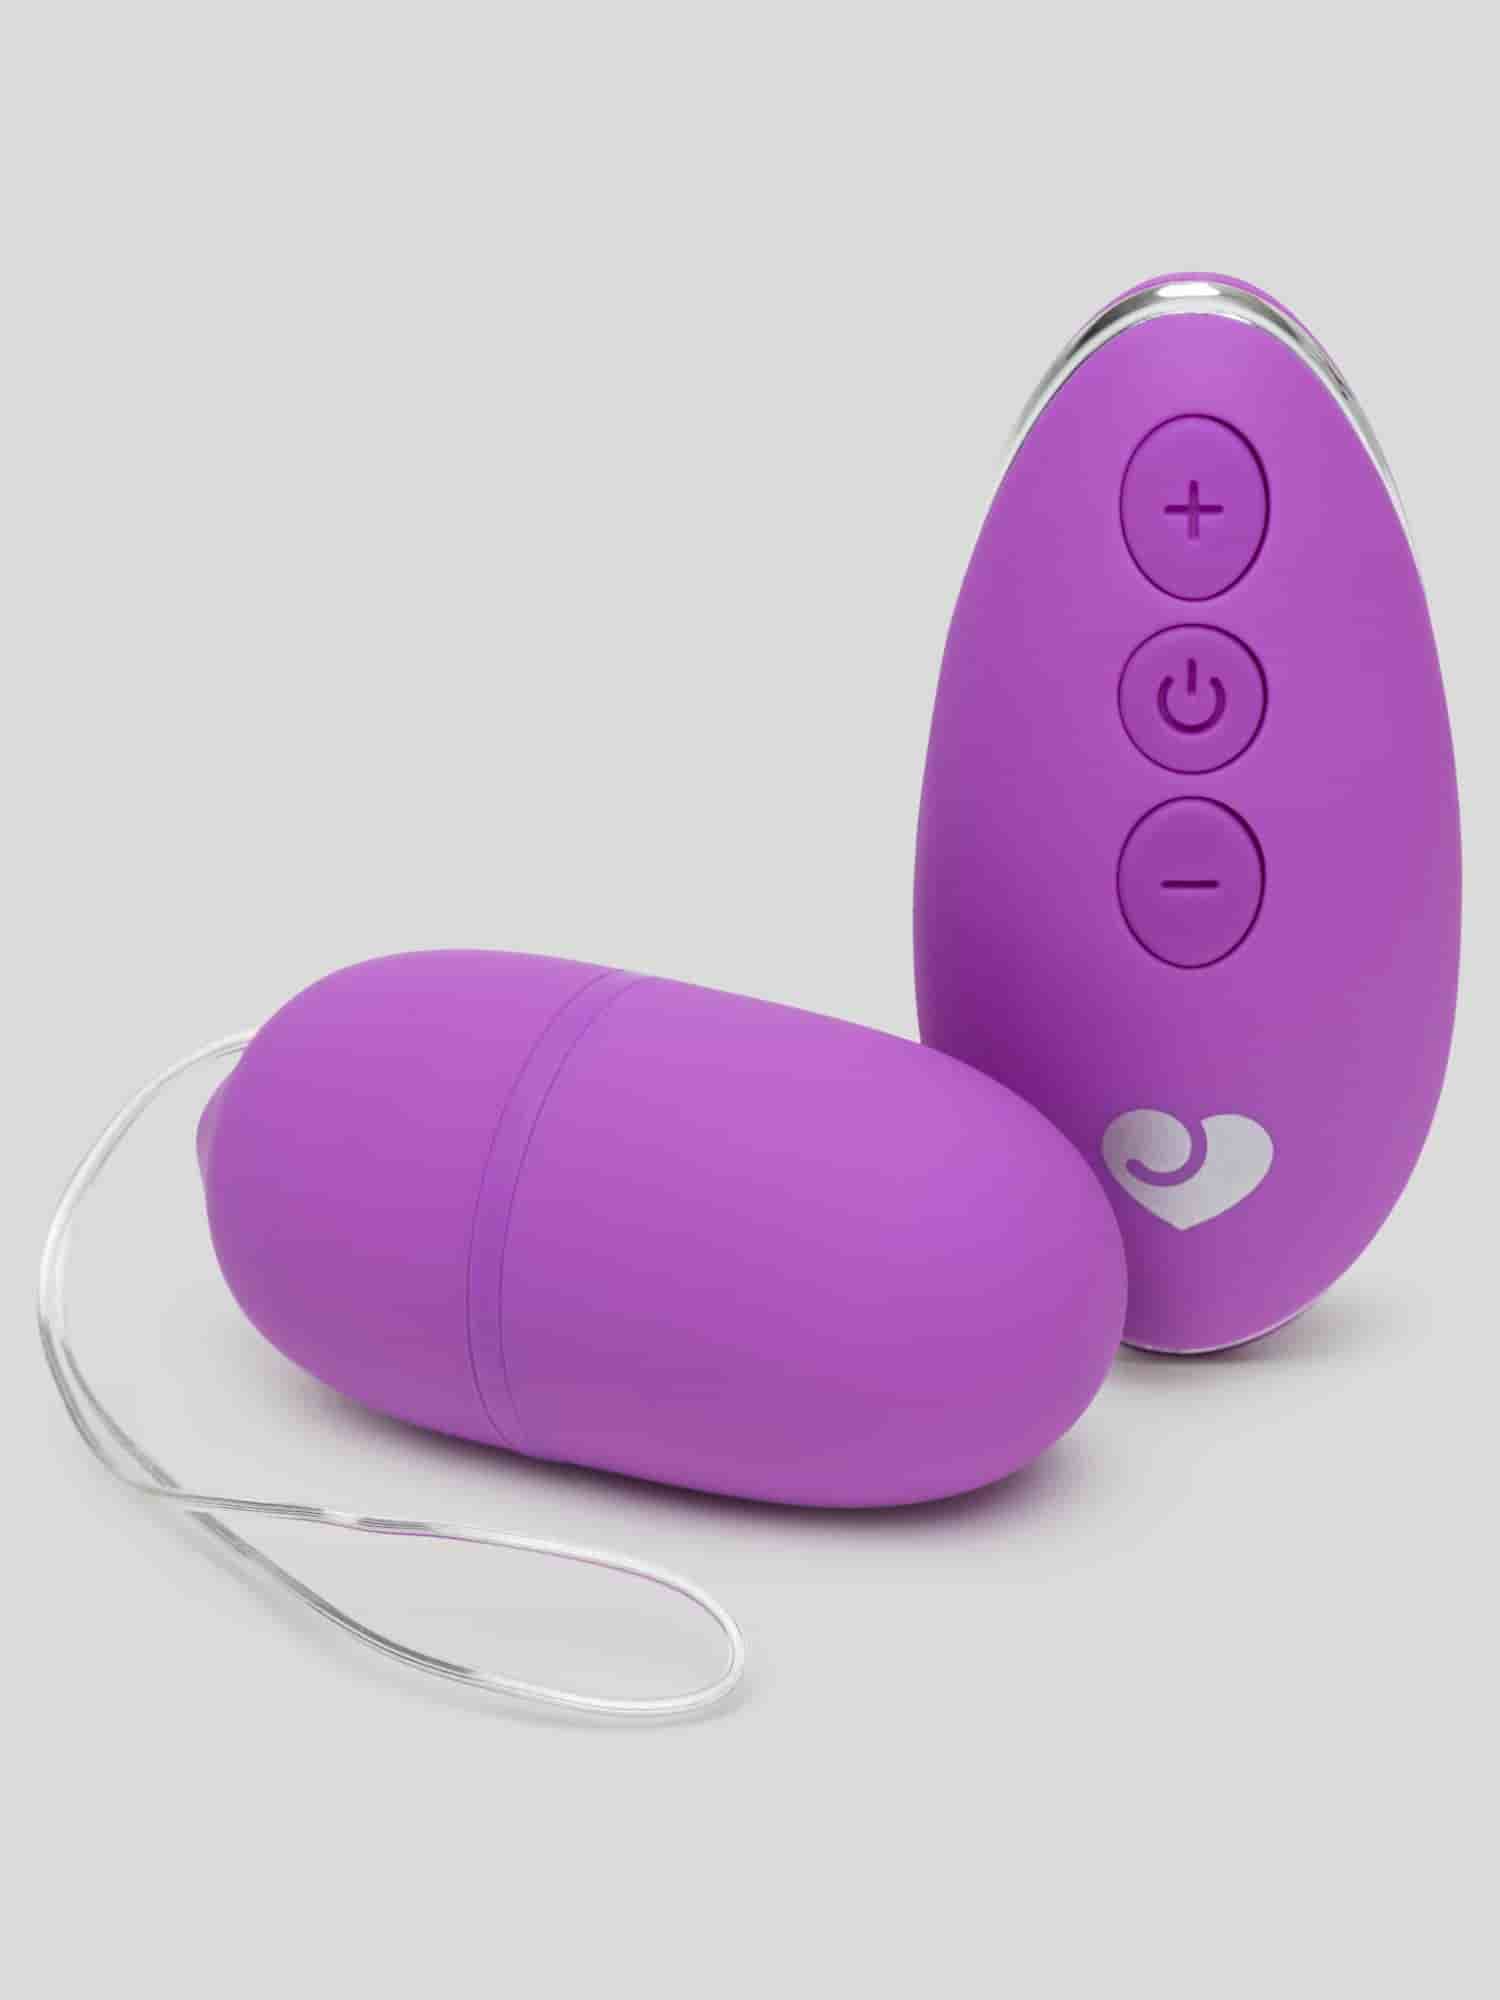 Rose Pink Egg Vibrator For Women The Naughty Store